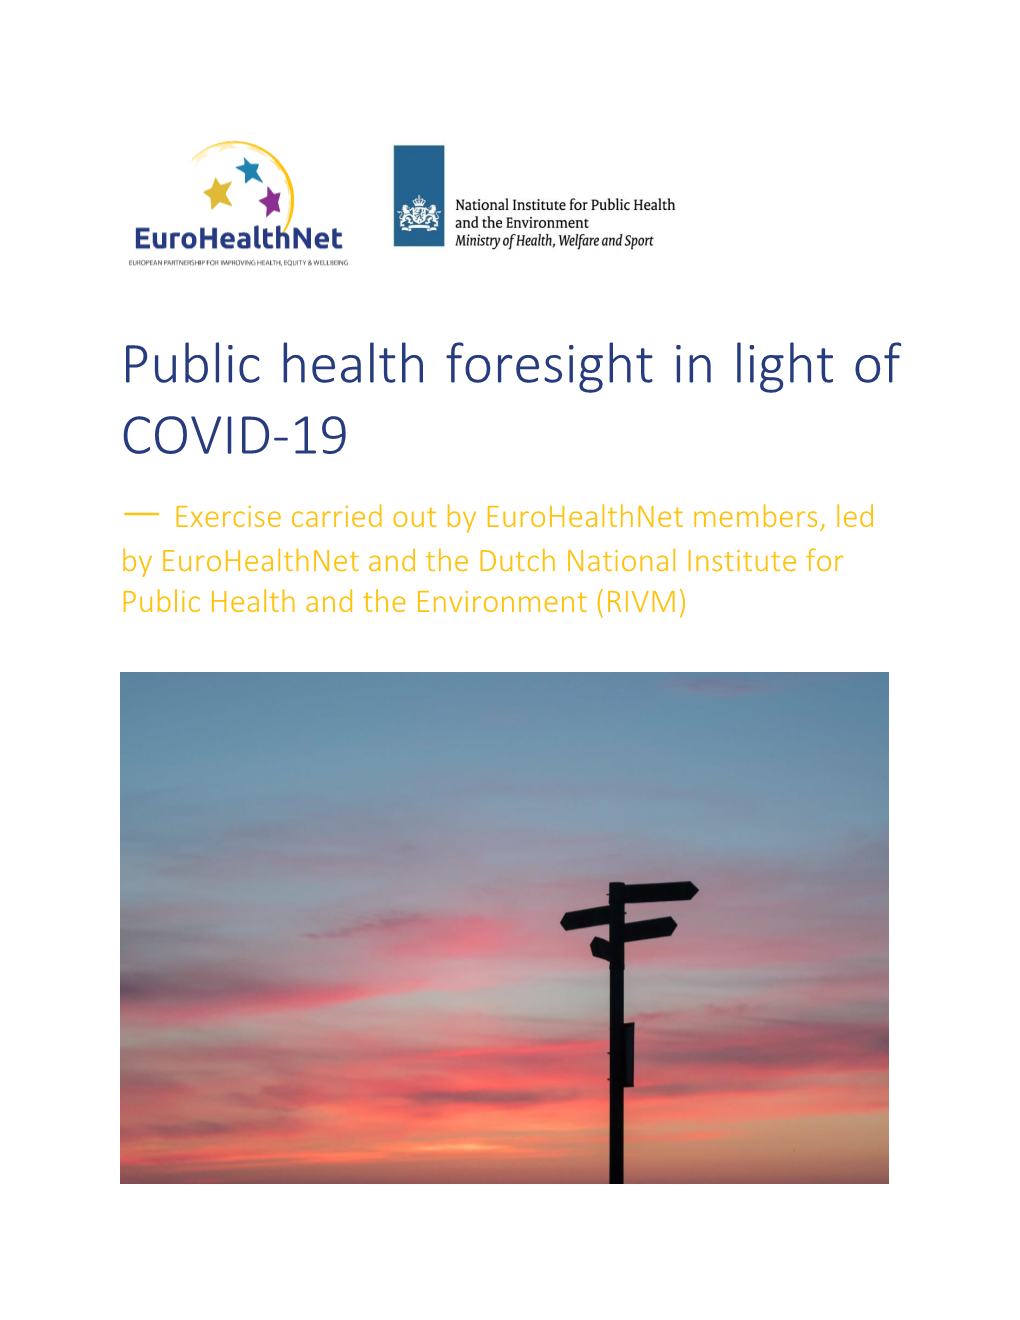 Public Health Foresight in Light of COVID-19